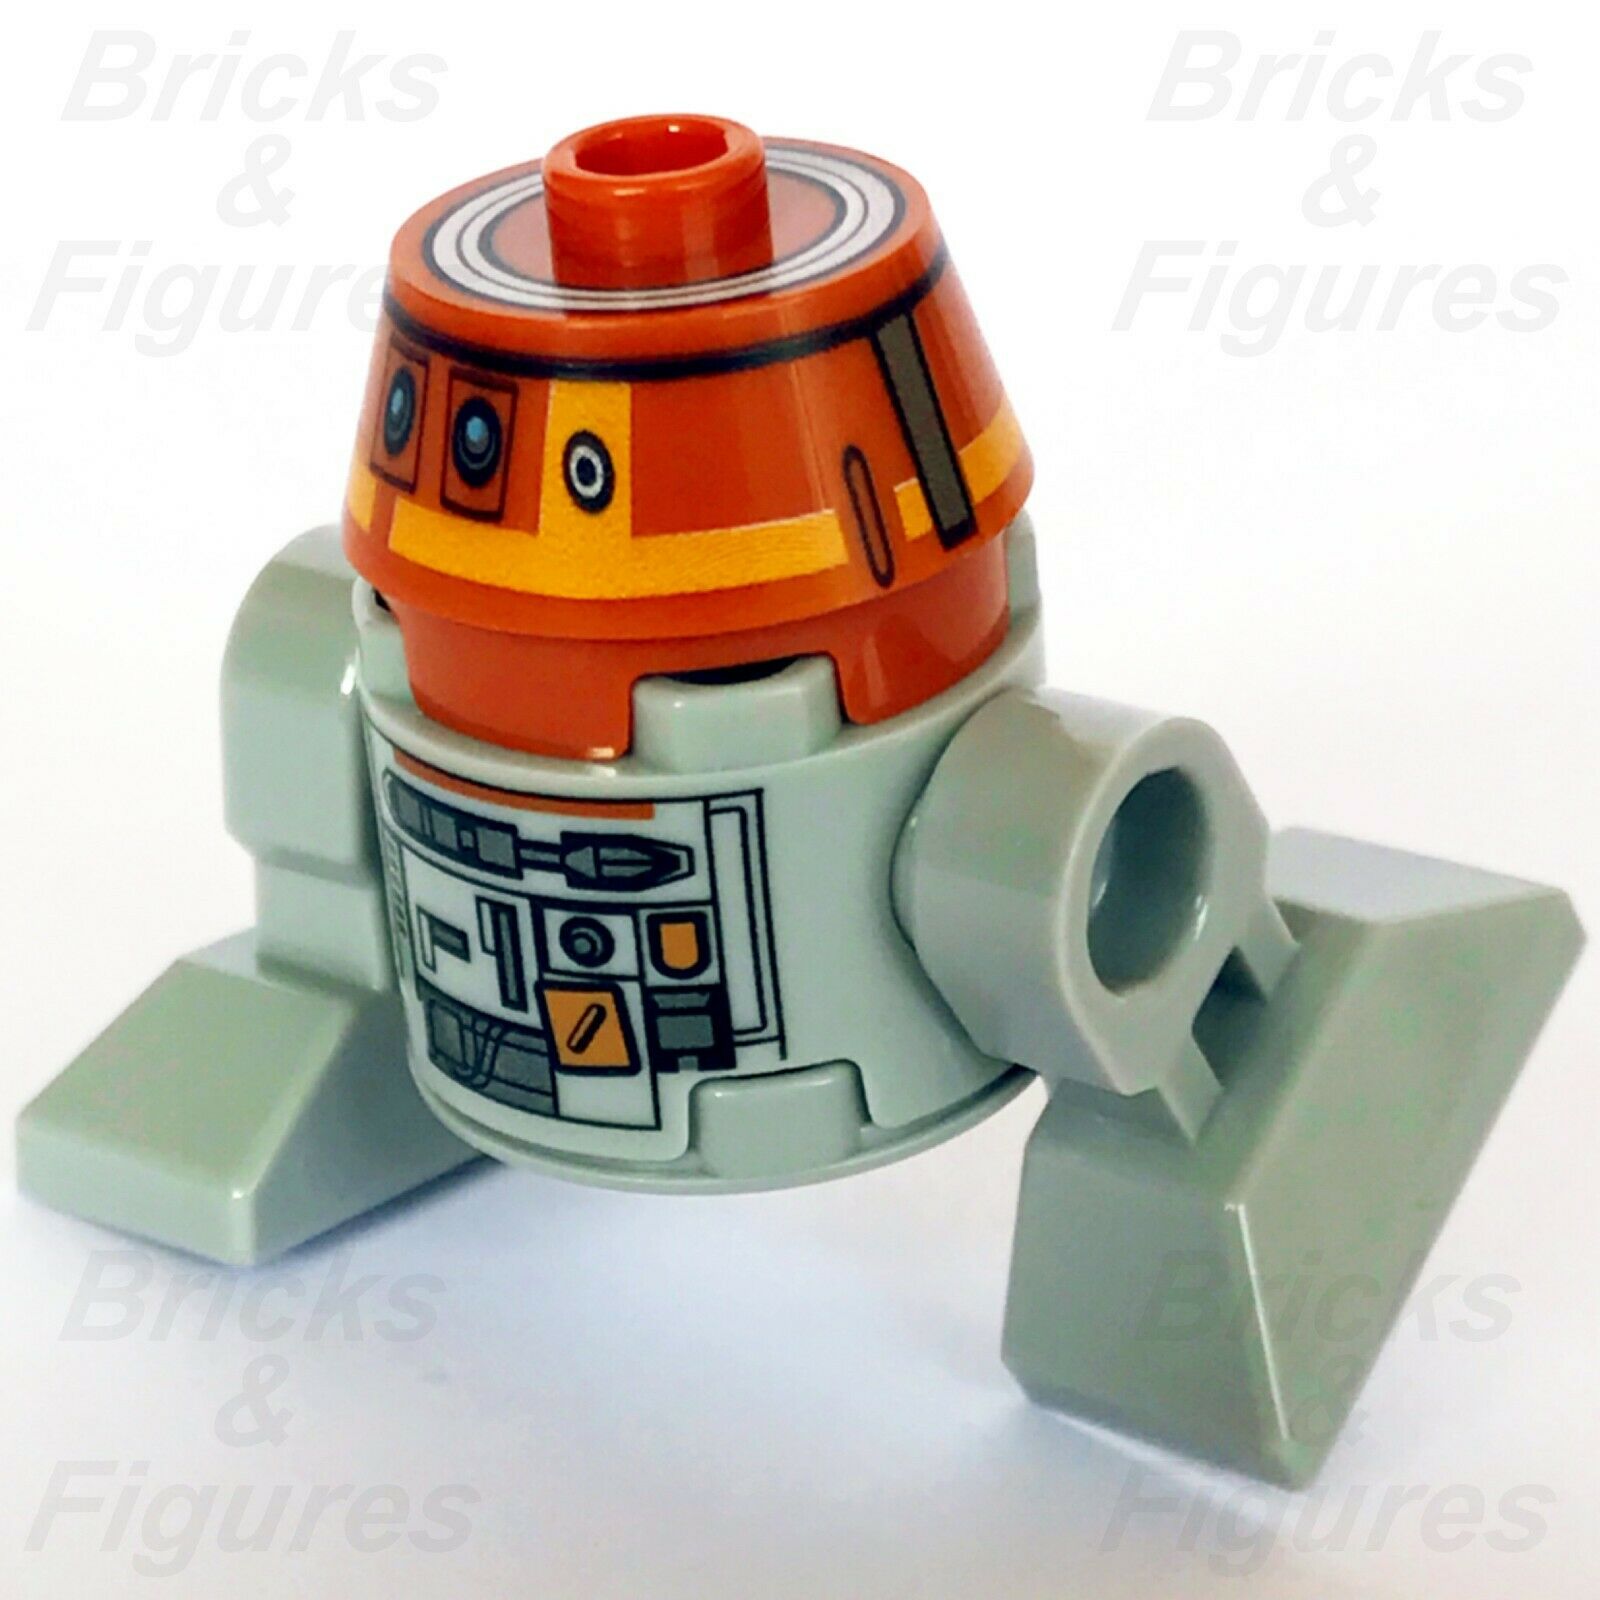 New Star Wars LEGO Chopper C1-10P Droid Rebels Minifigure 75158 75048 75170 - Bricks & Figures